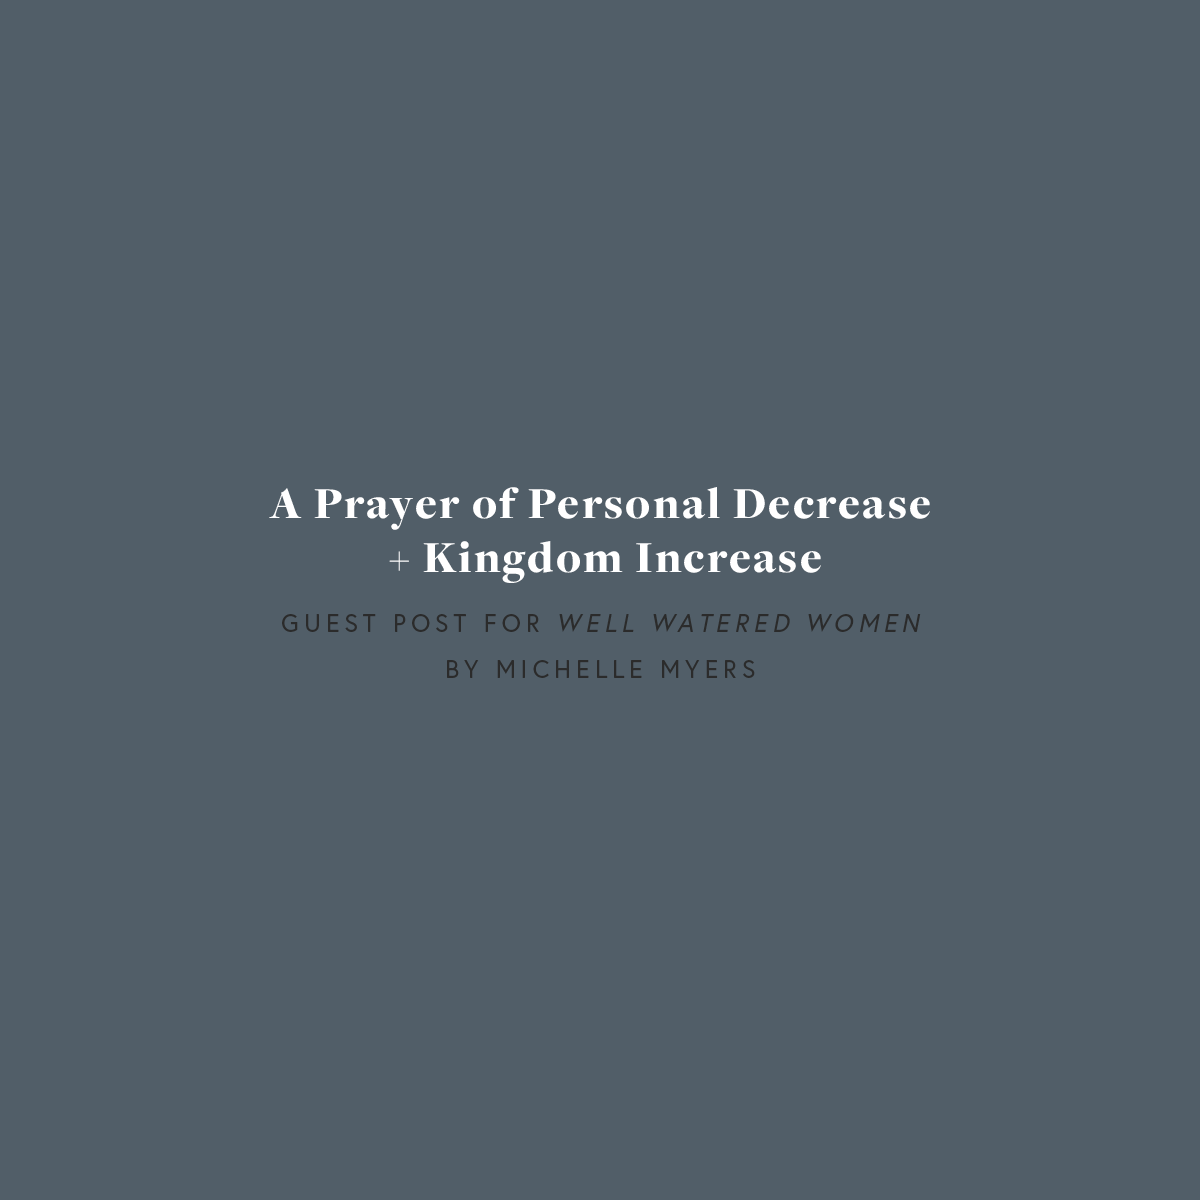 A Prayer of Personal Decrease + Kingdom Increase